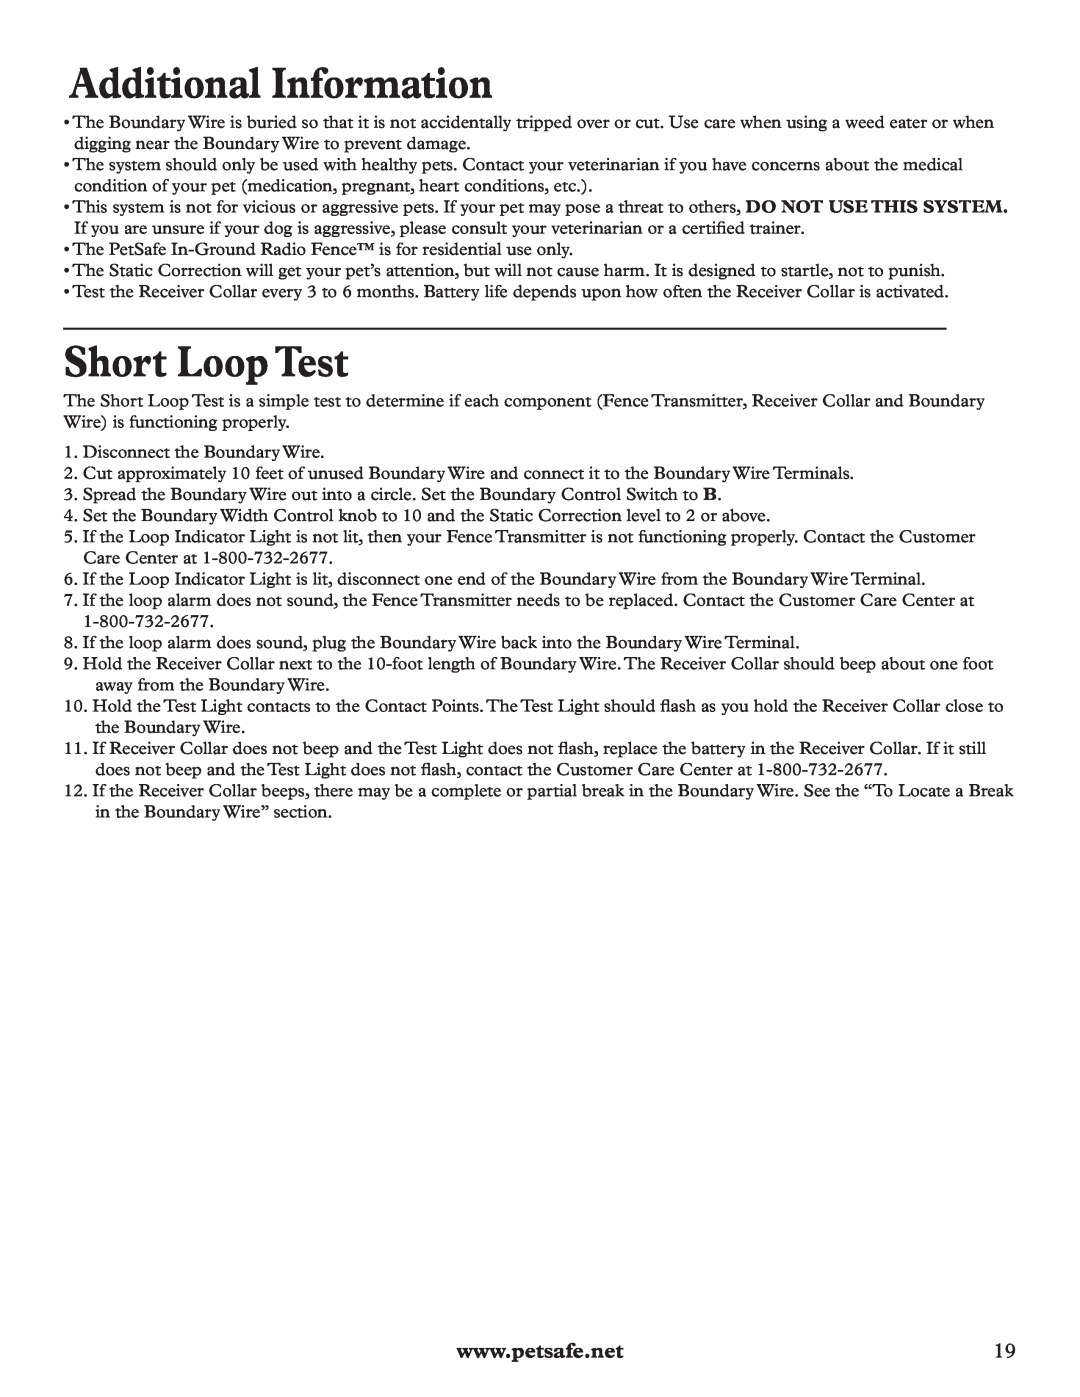 Petsafe RFA-200 manual Additional Information, Short Loop Test 